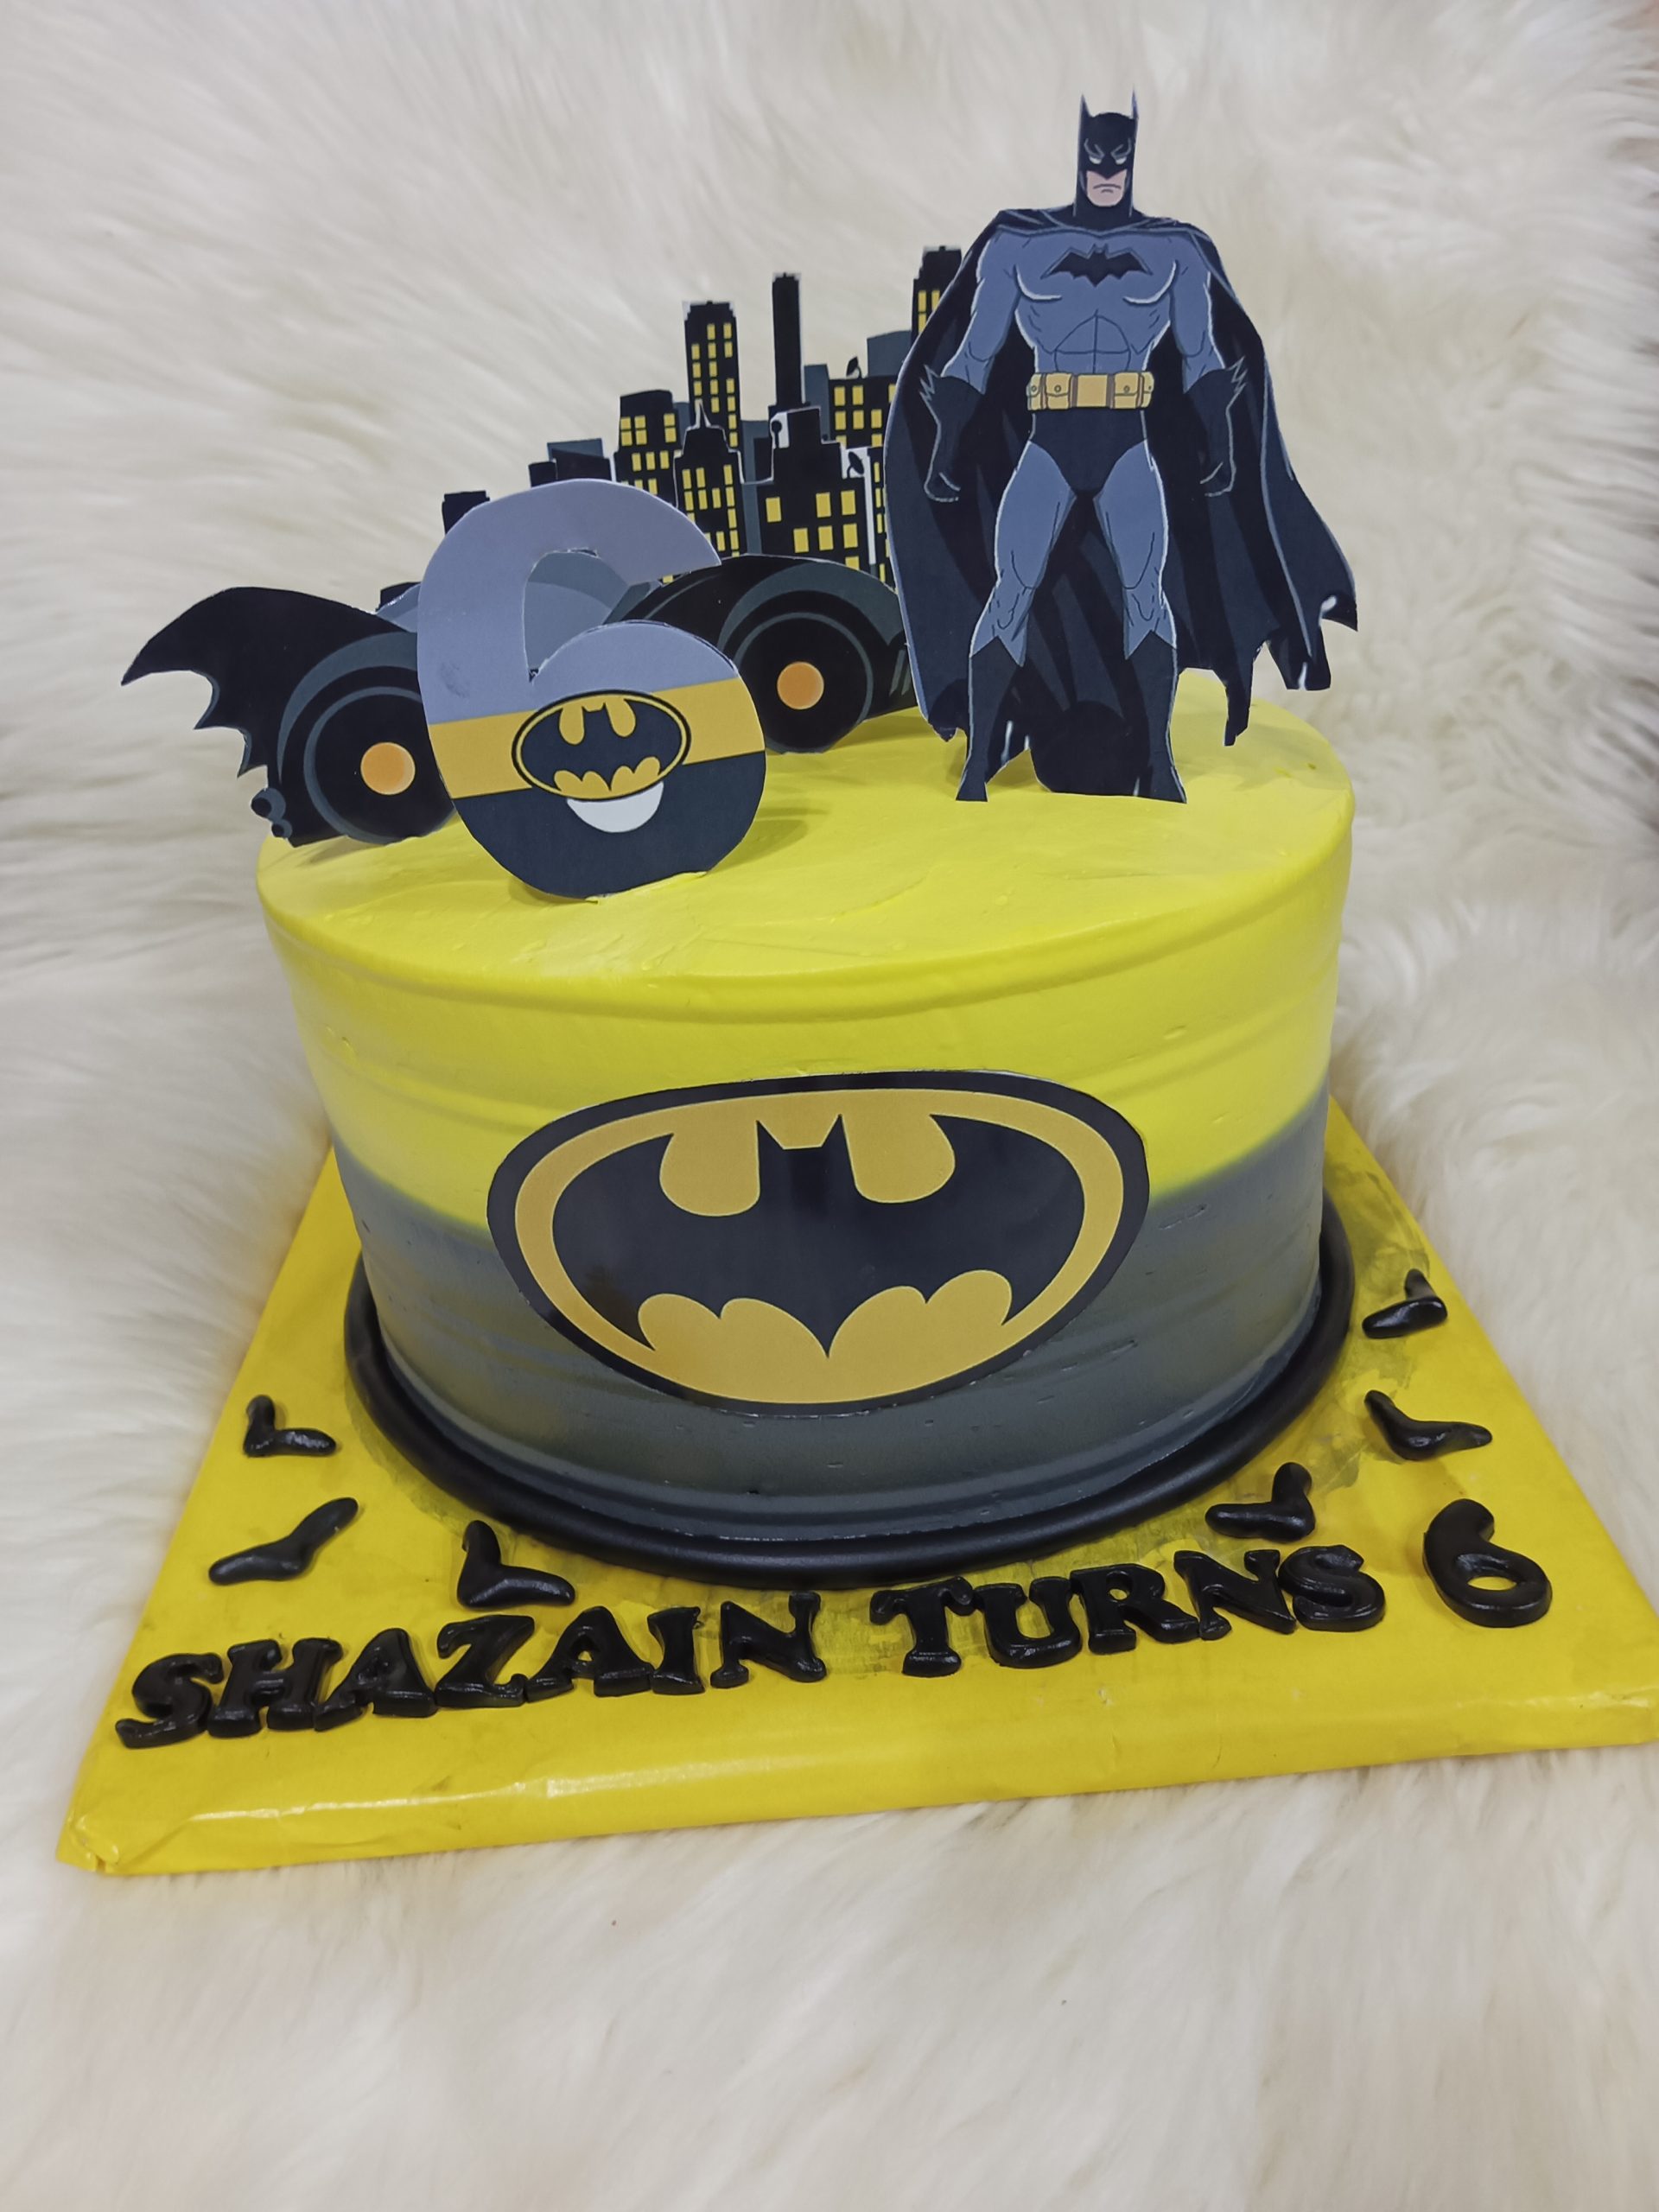 How to Make a Easy DIY Batman Cake - The Exploring Family